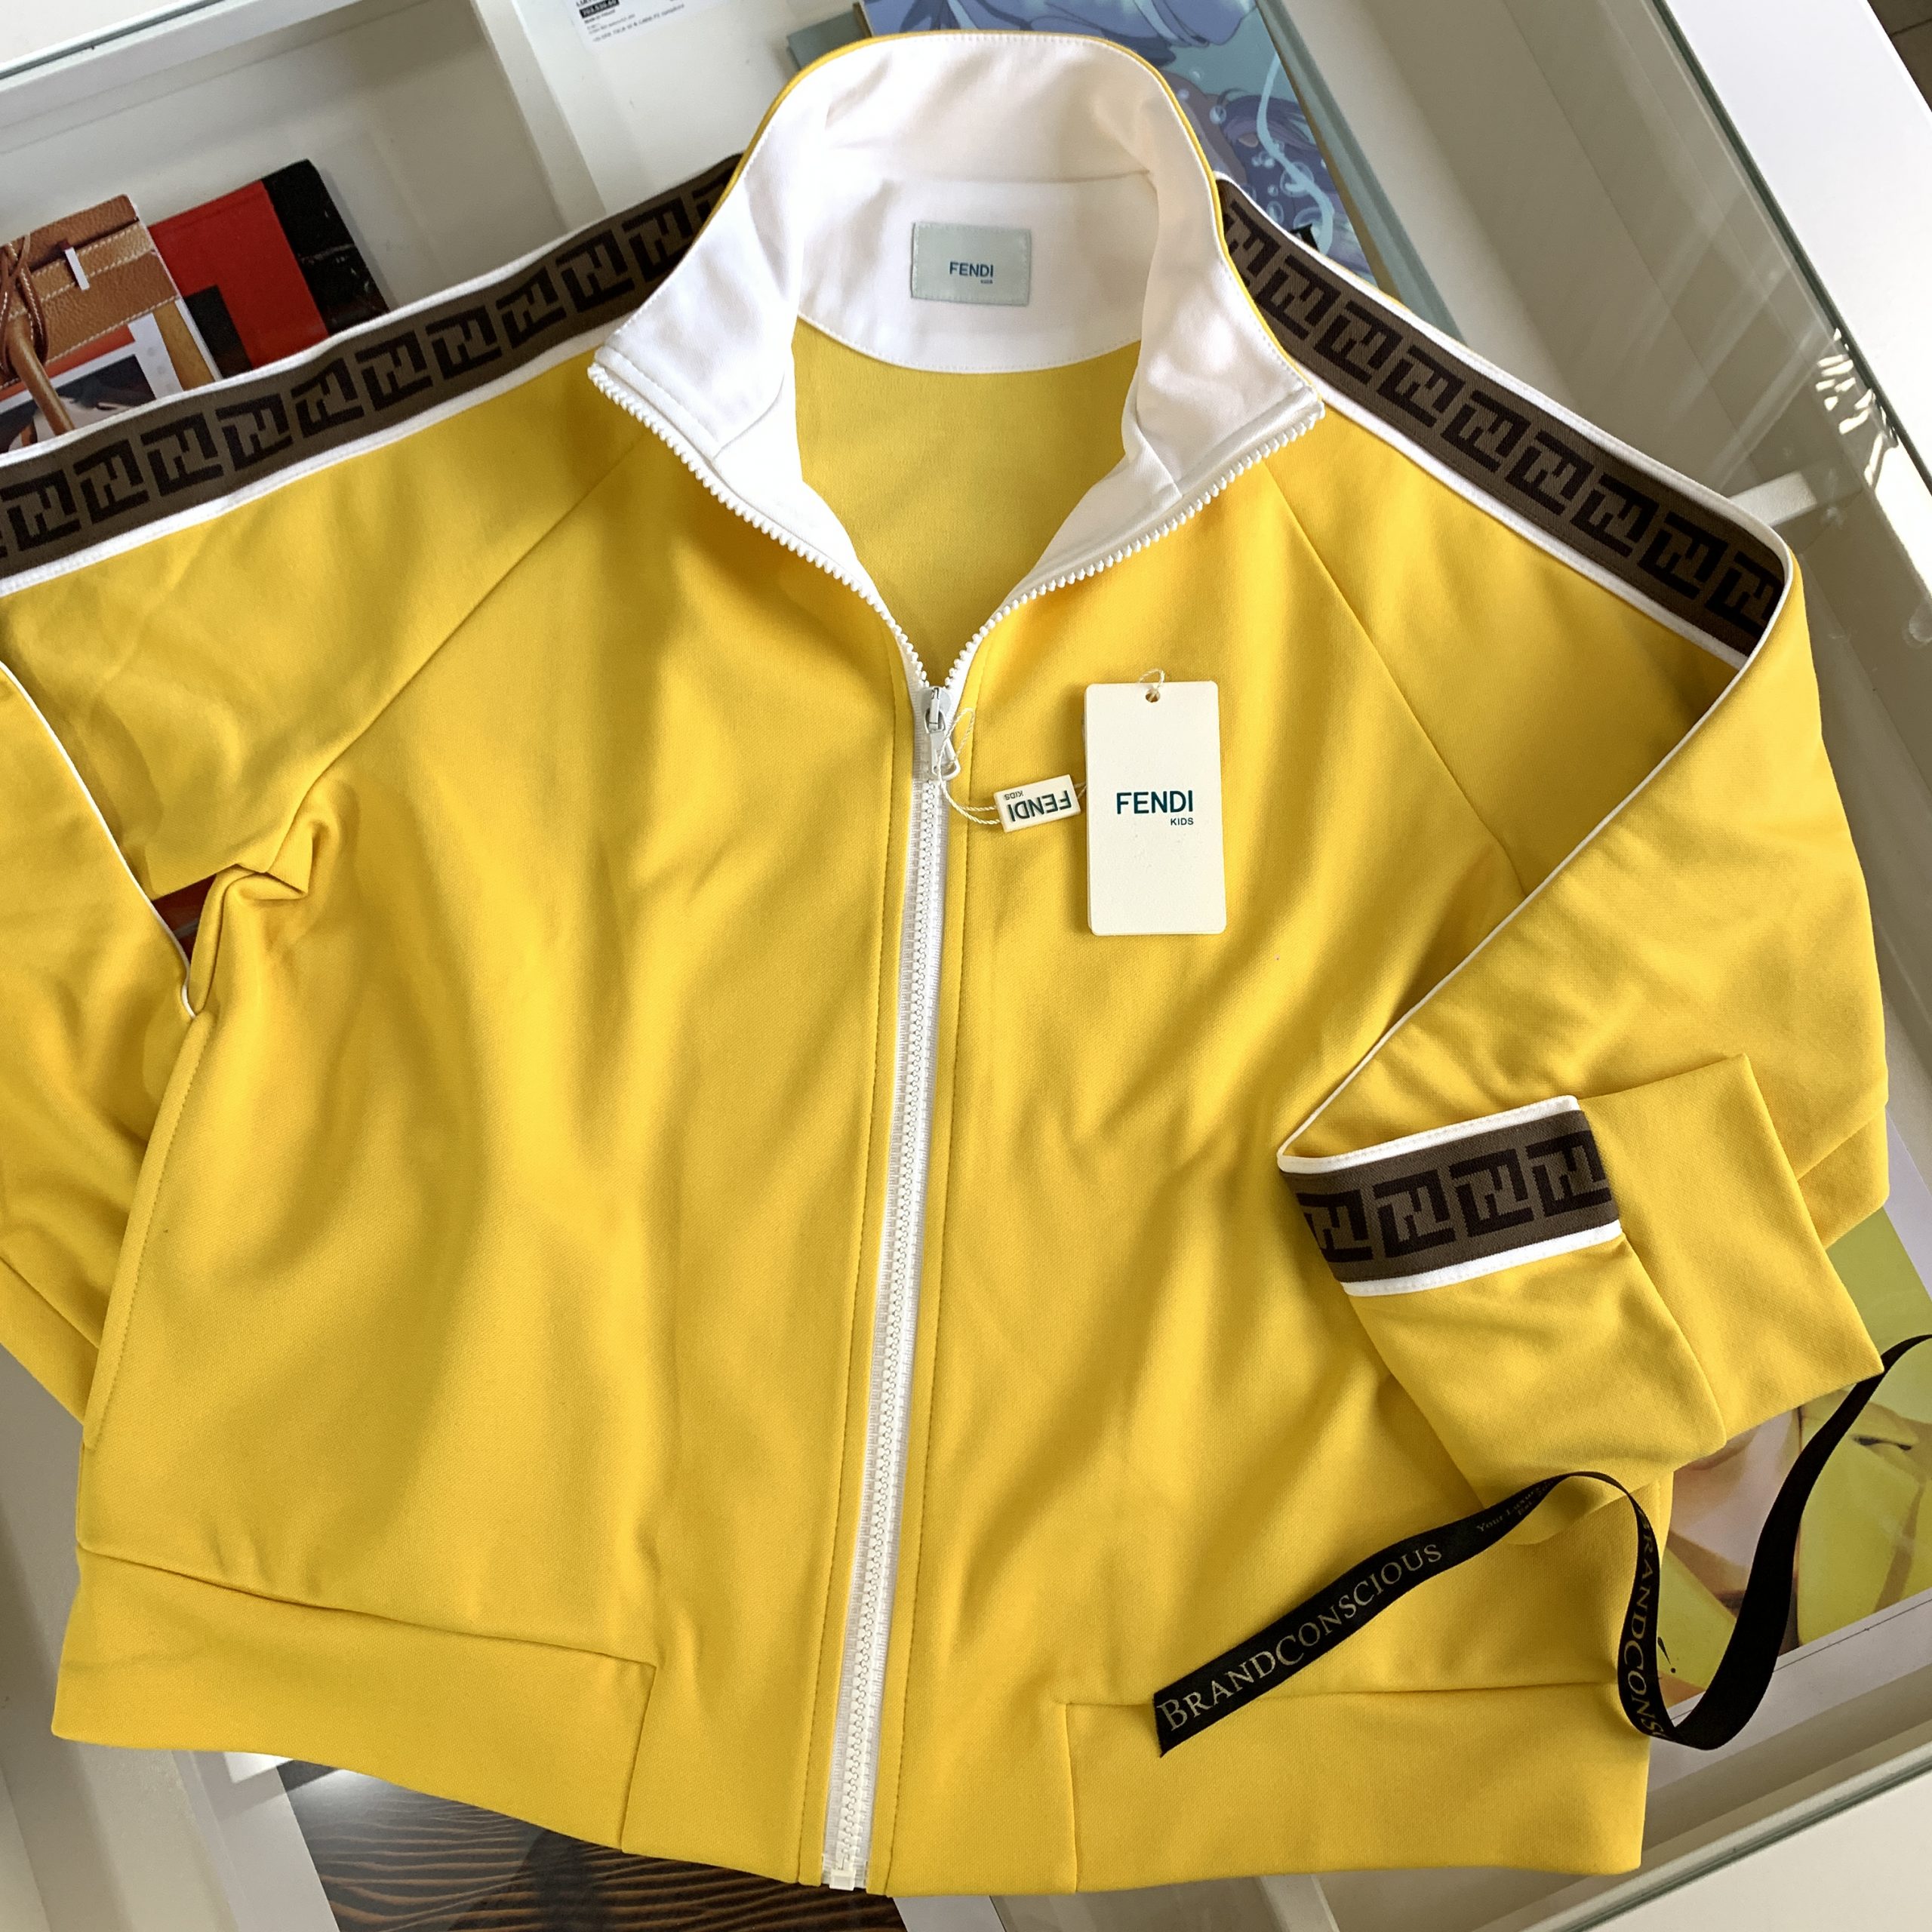 frankford yellow jackets｜TikTok Search